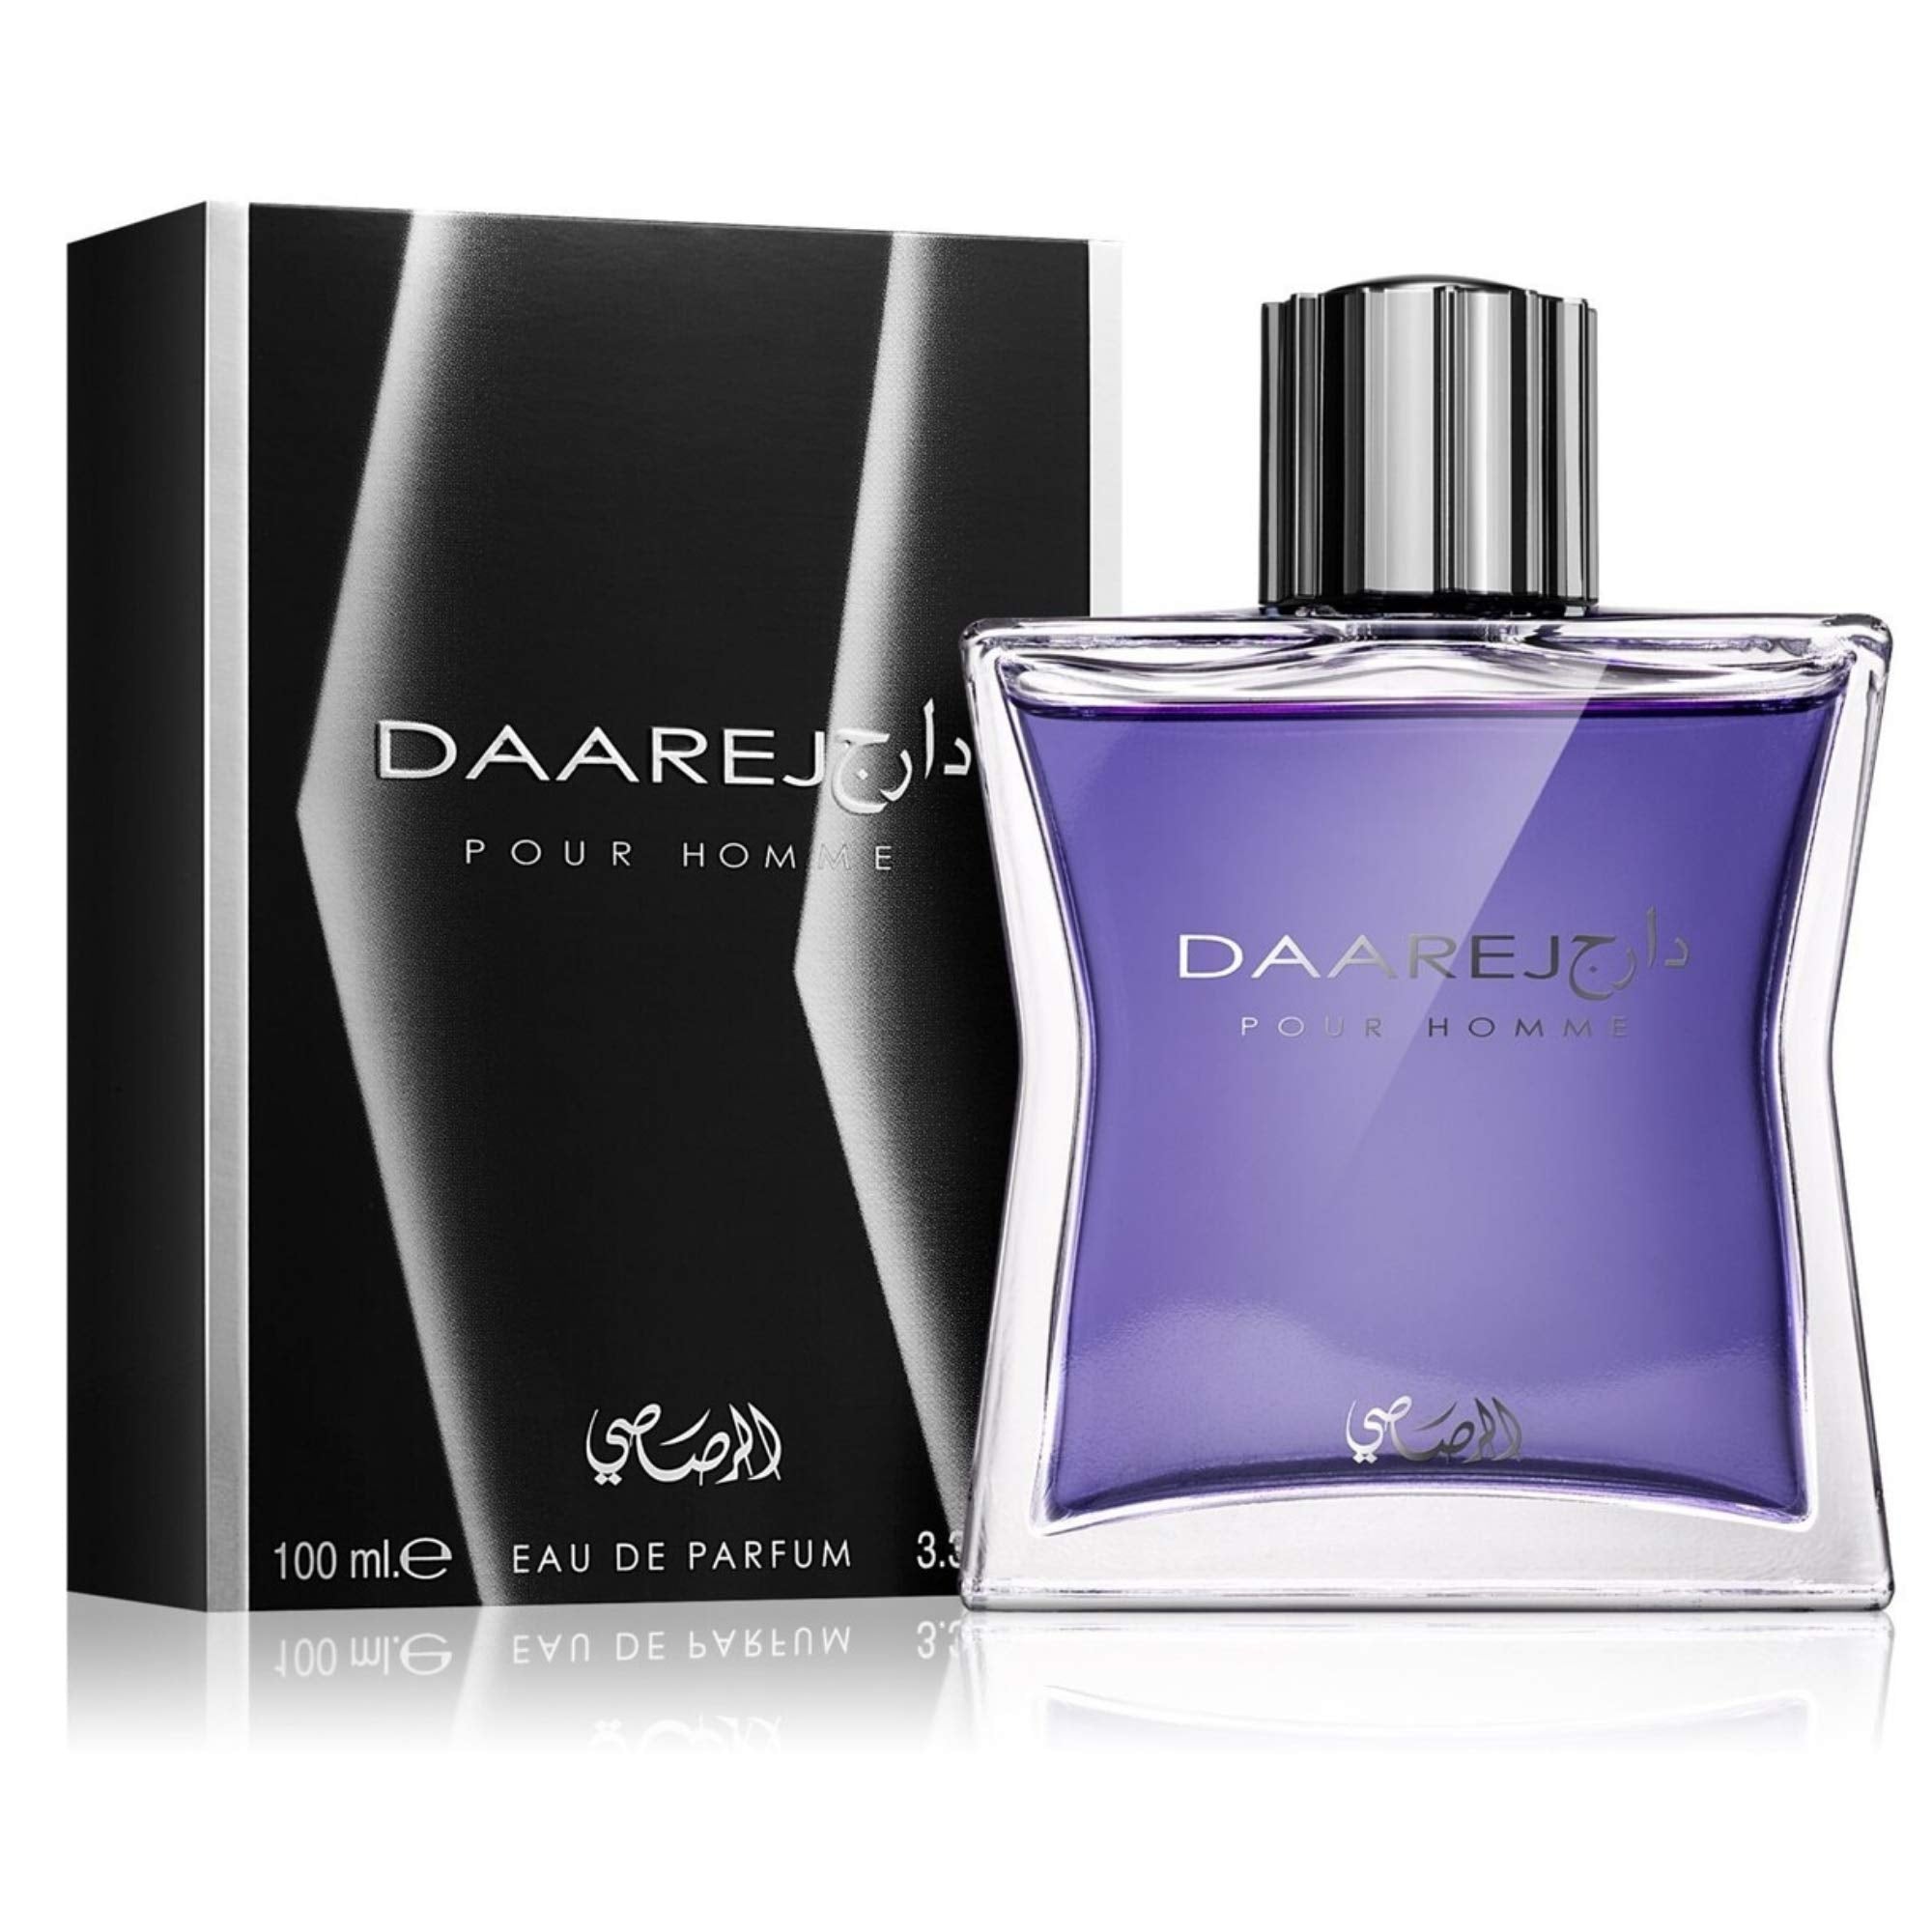 Daarej Pour Home EDP (100ml) perfume spray by Rasasi